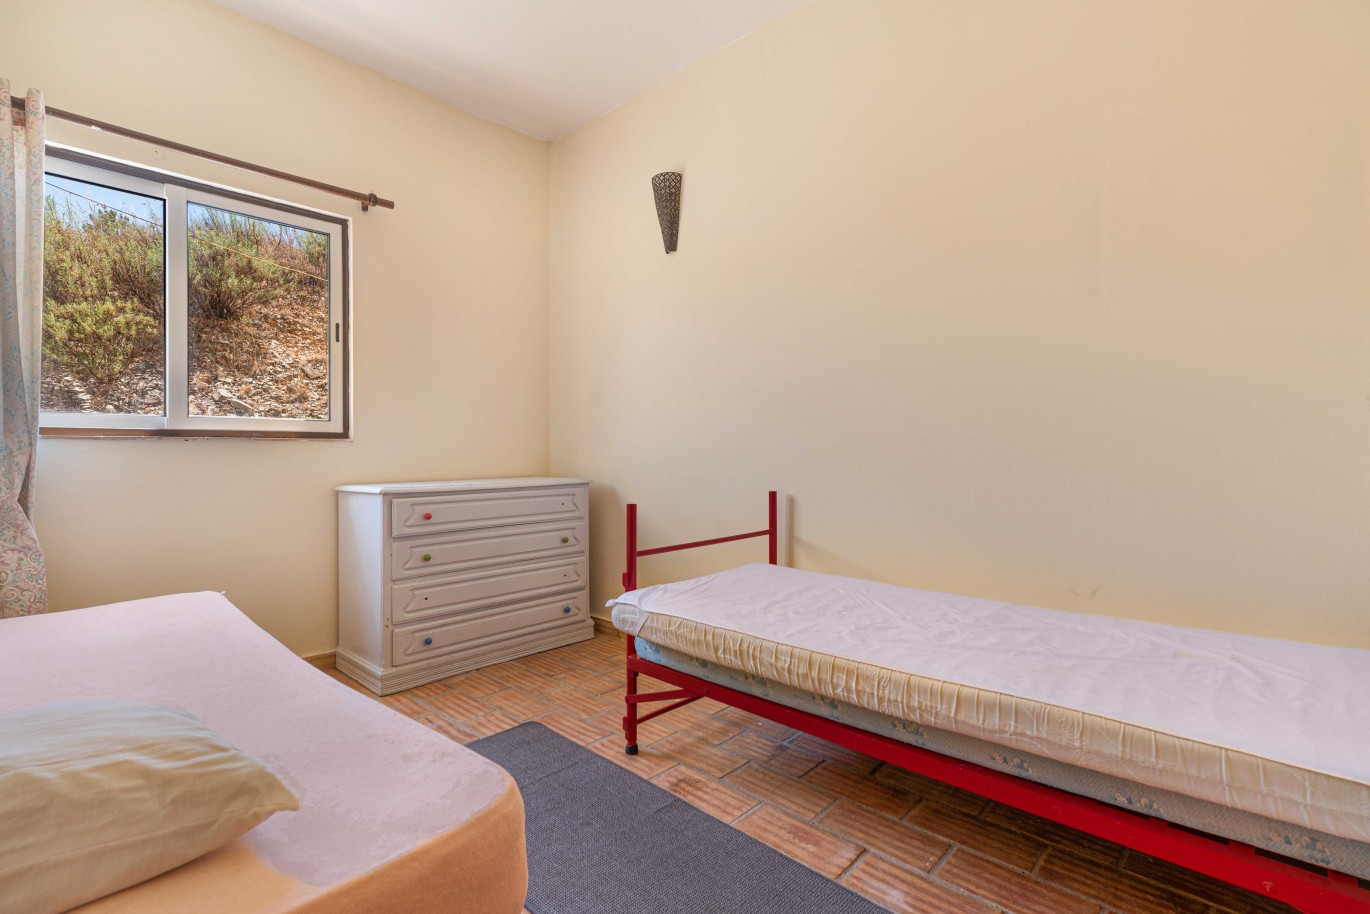 9 bedroom villa for sale in Pereira, Algarve_231605